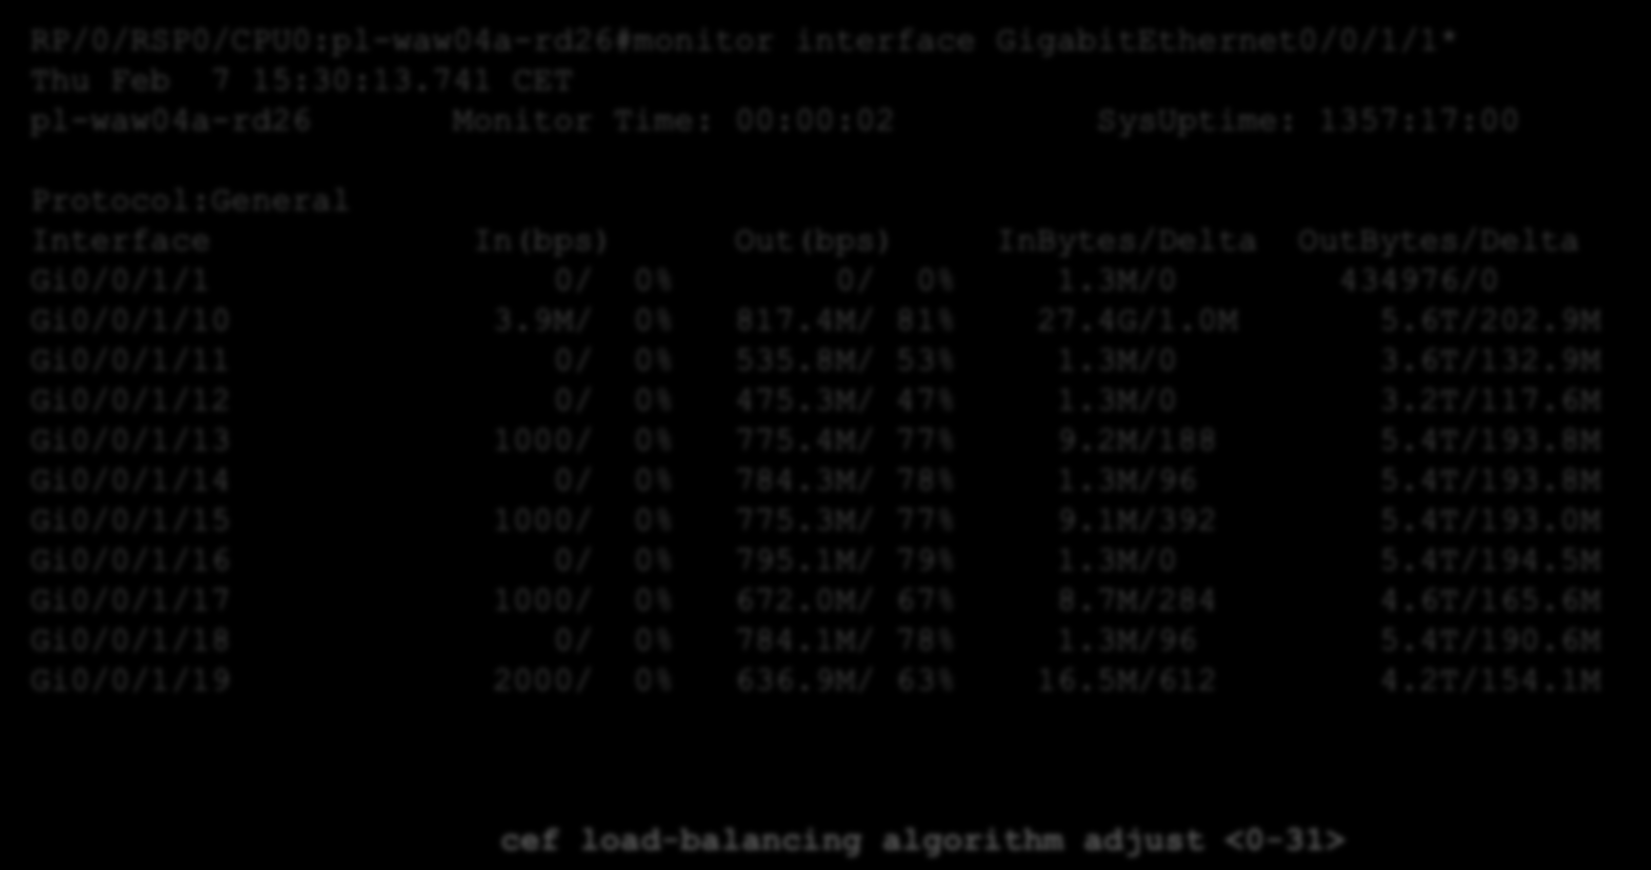 Load-balancing RP/0/RSP0/CPU0:pl-waw04a-rd26#monitor interface GigabitEthernet0/0/1/1* Thu Feb 7 15:30:13.